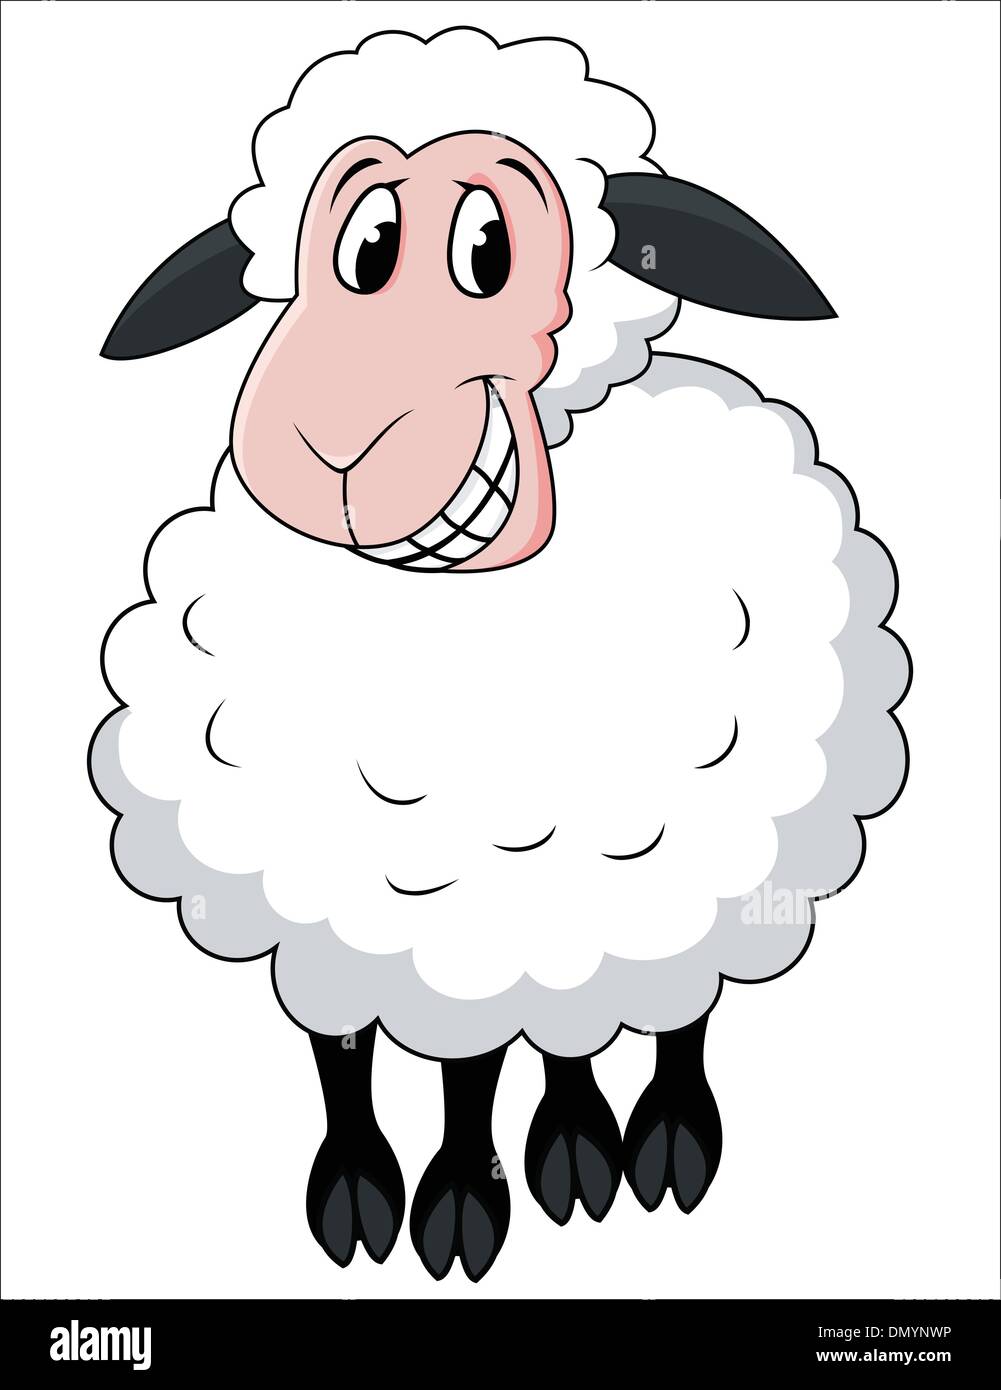 Smiling sheep cartoon Stock Vector